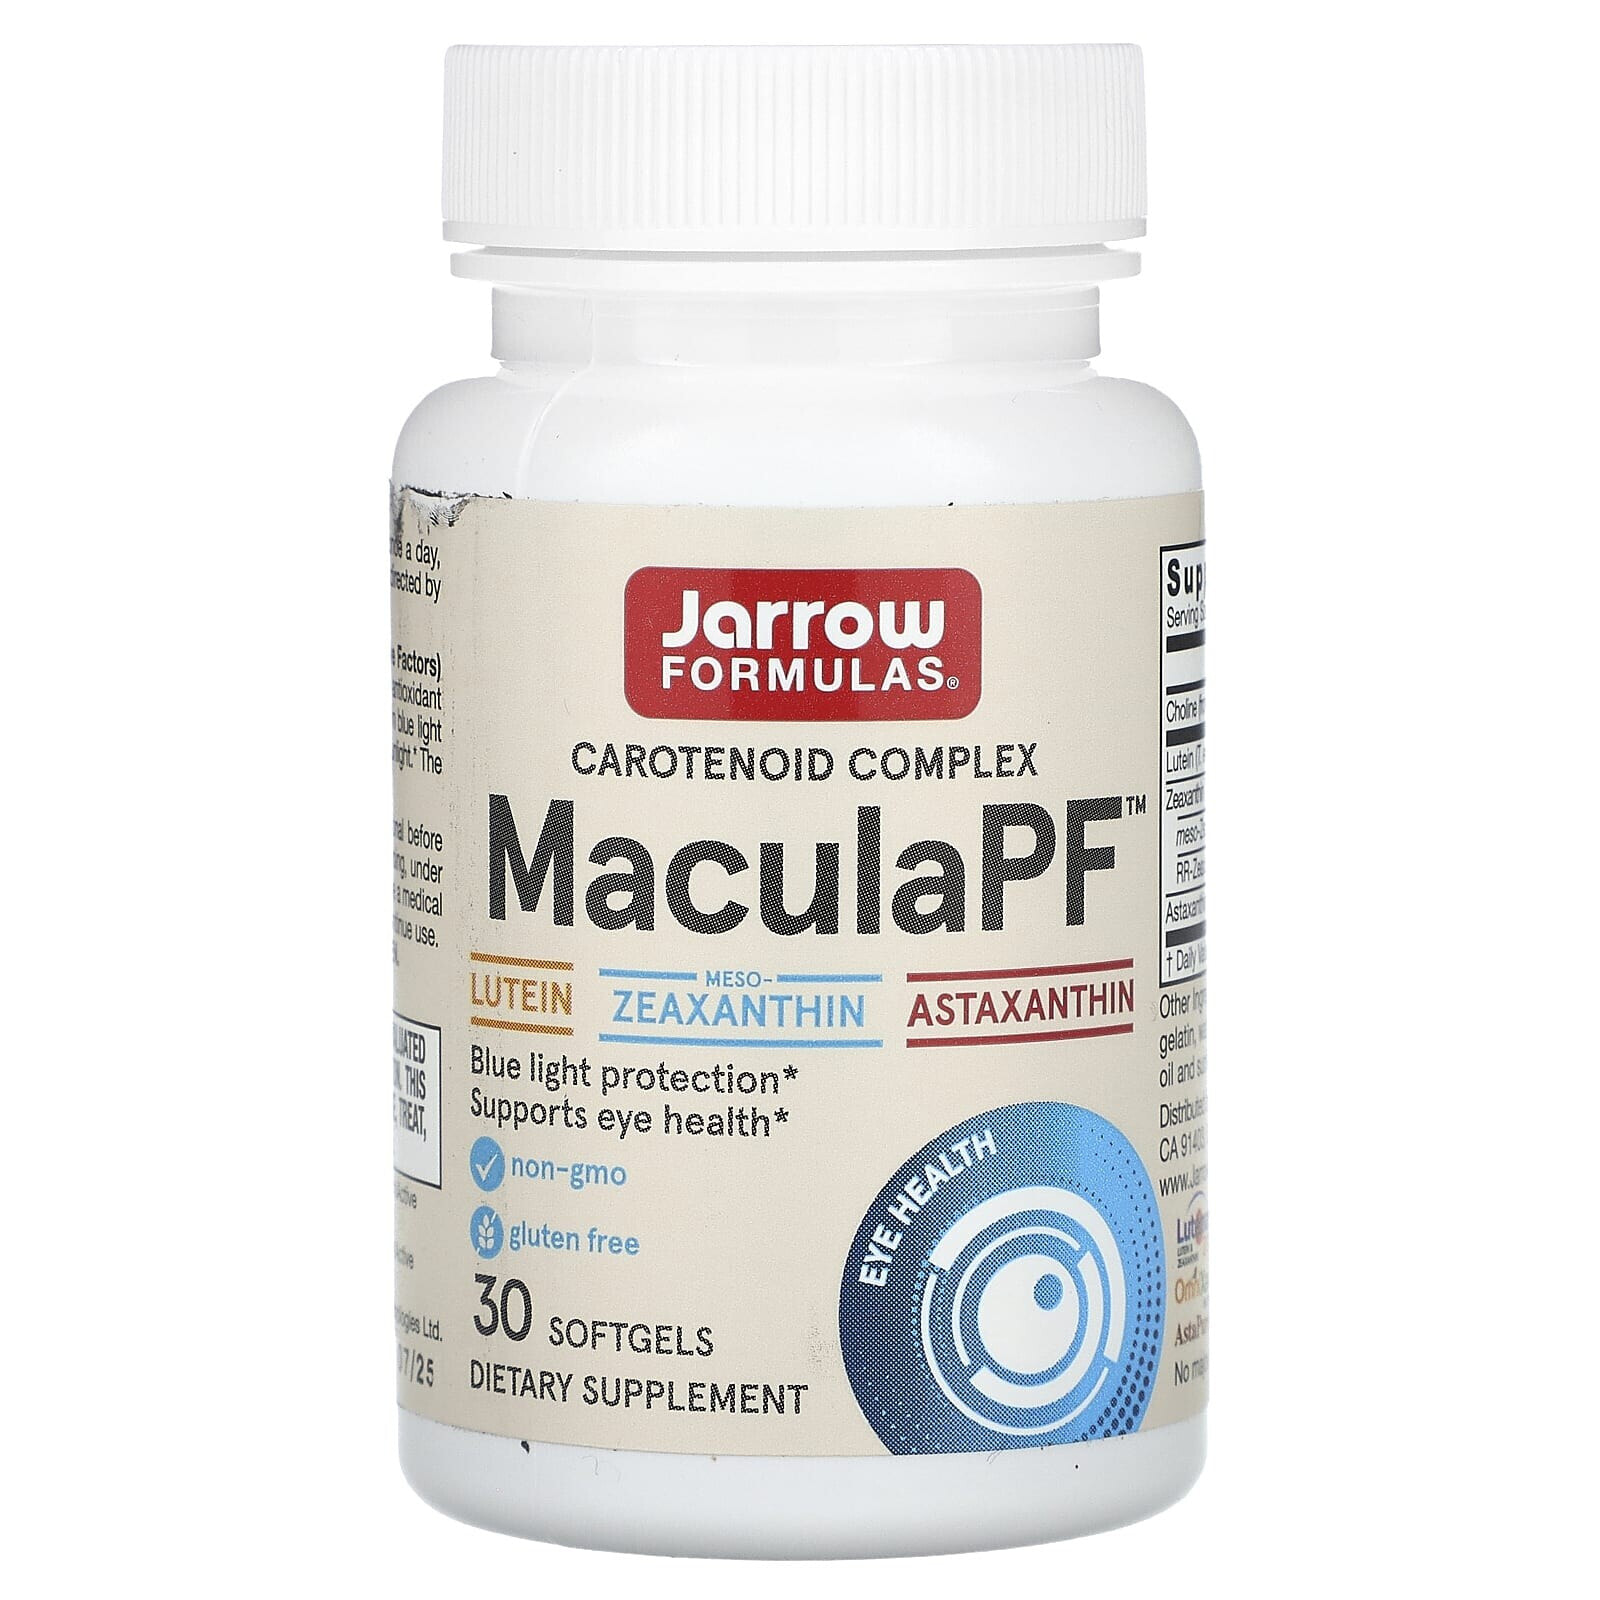 MaculaPF, Carotenoid Complex, 60 Softgels